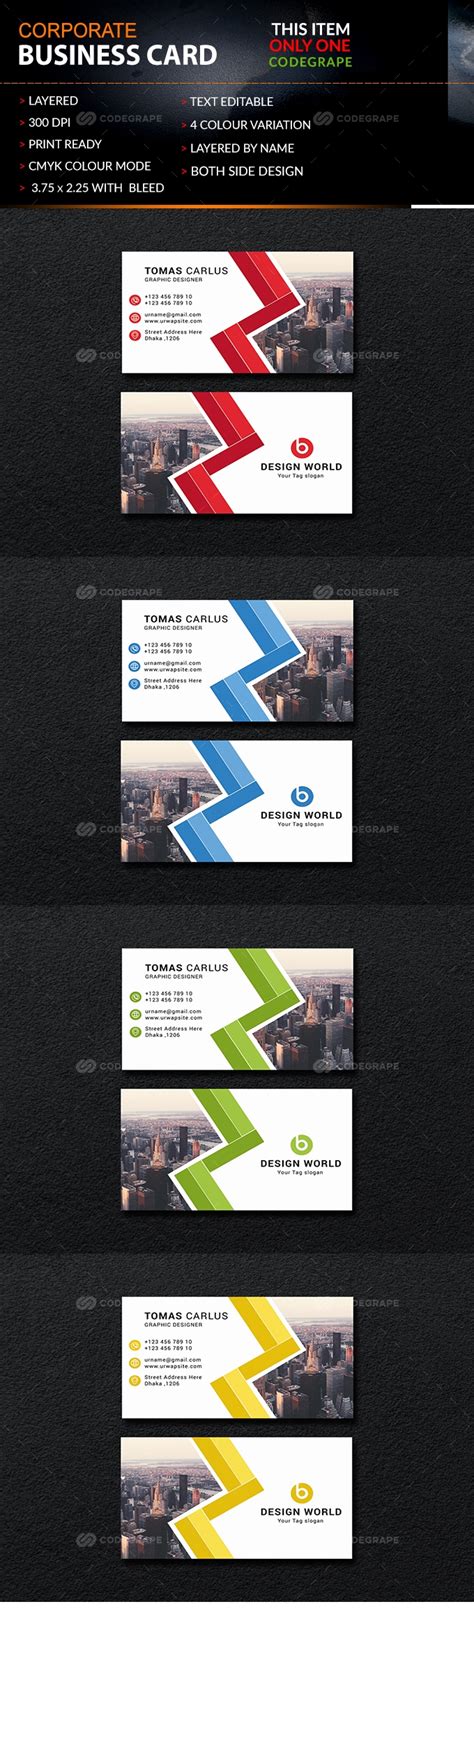 corporate business card prints codegrape